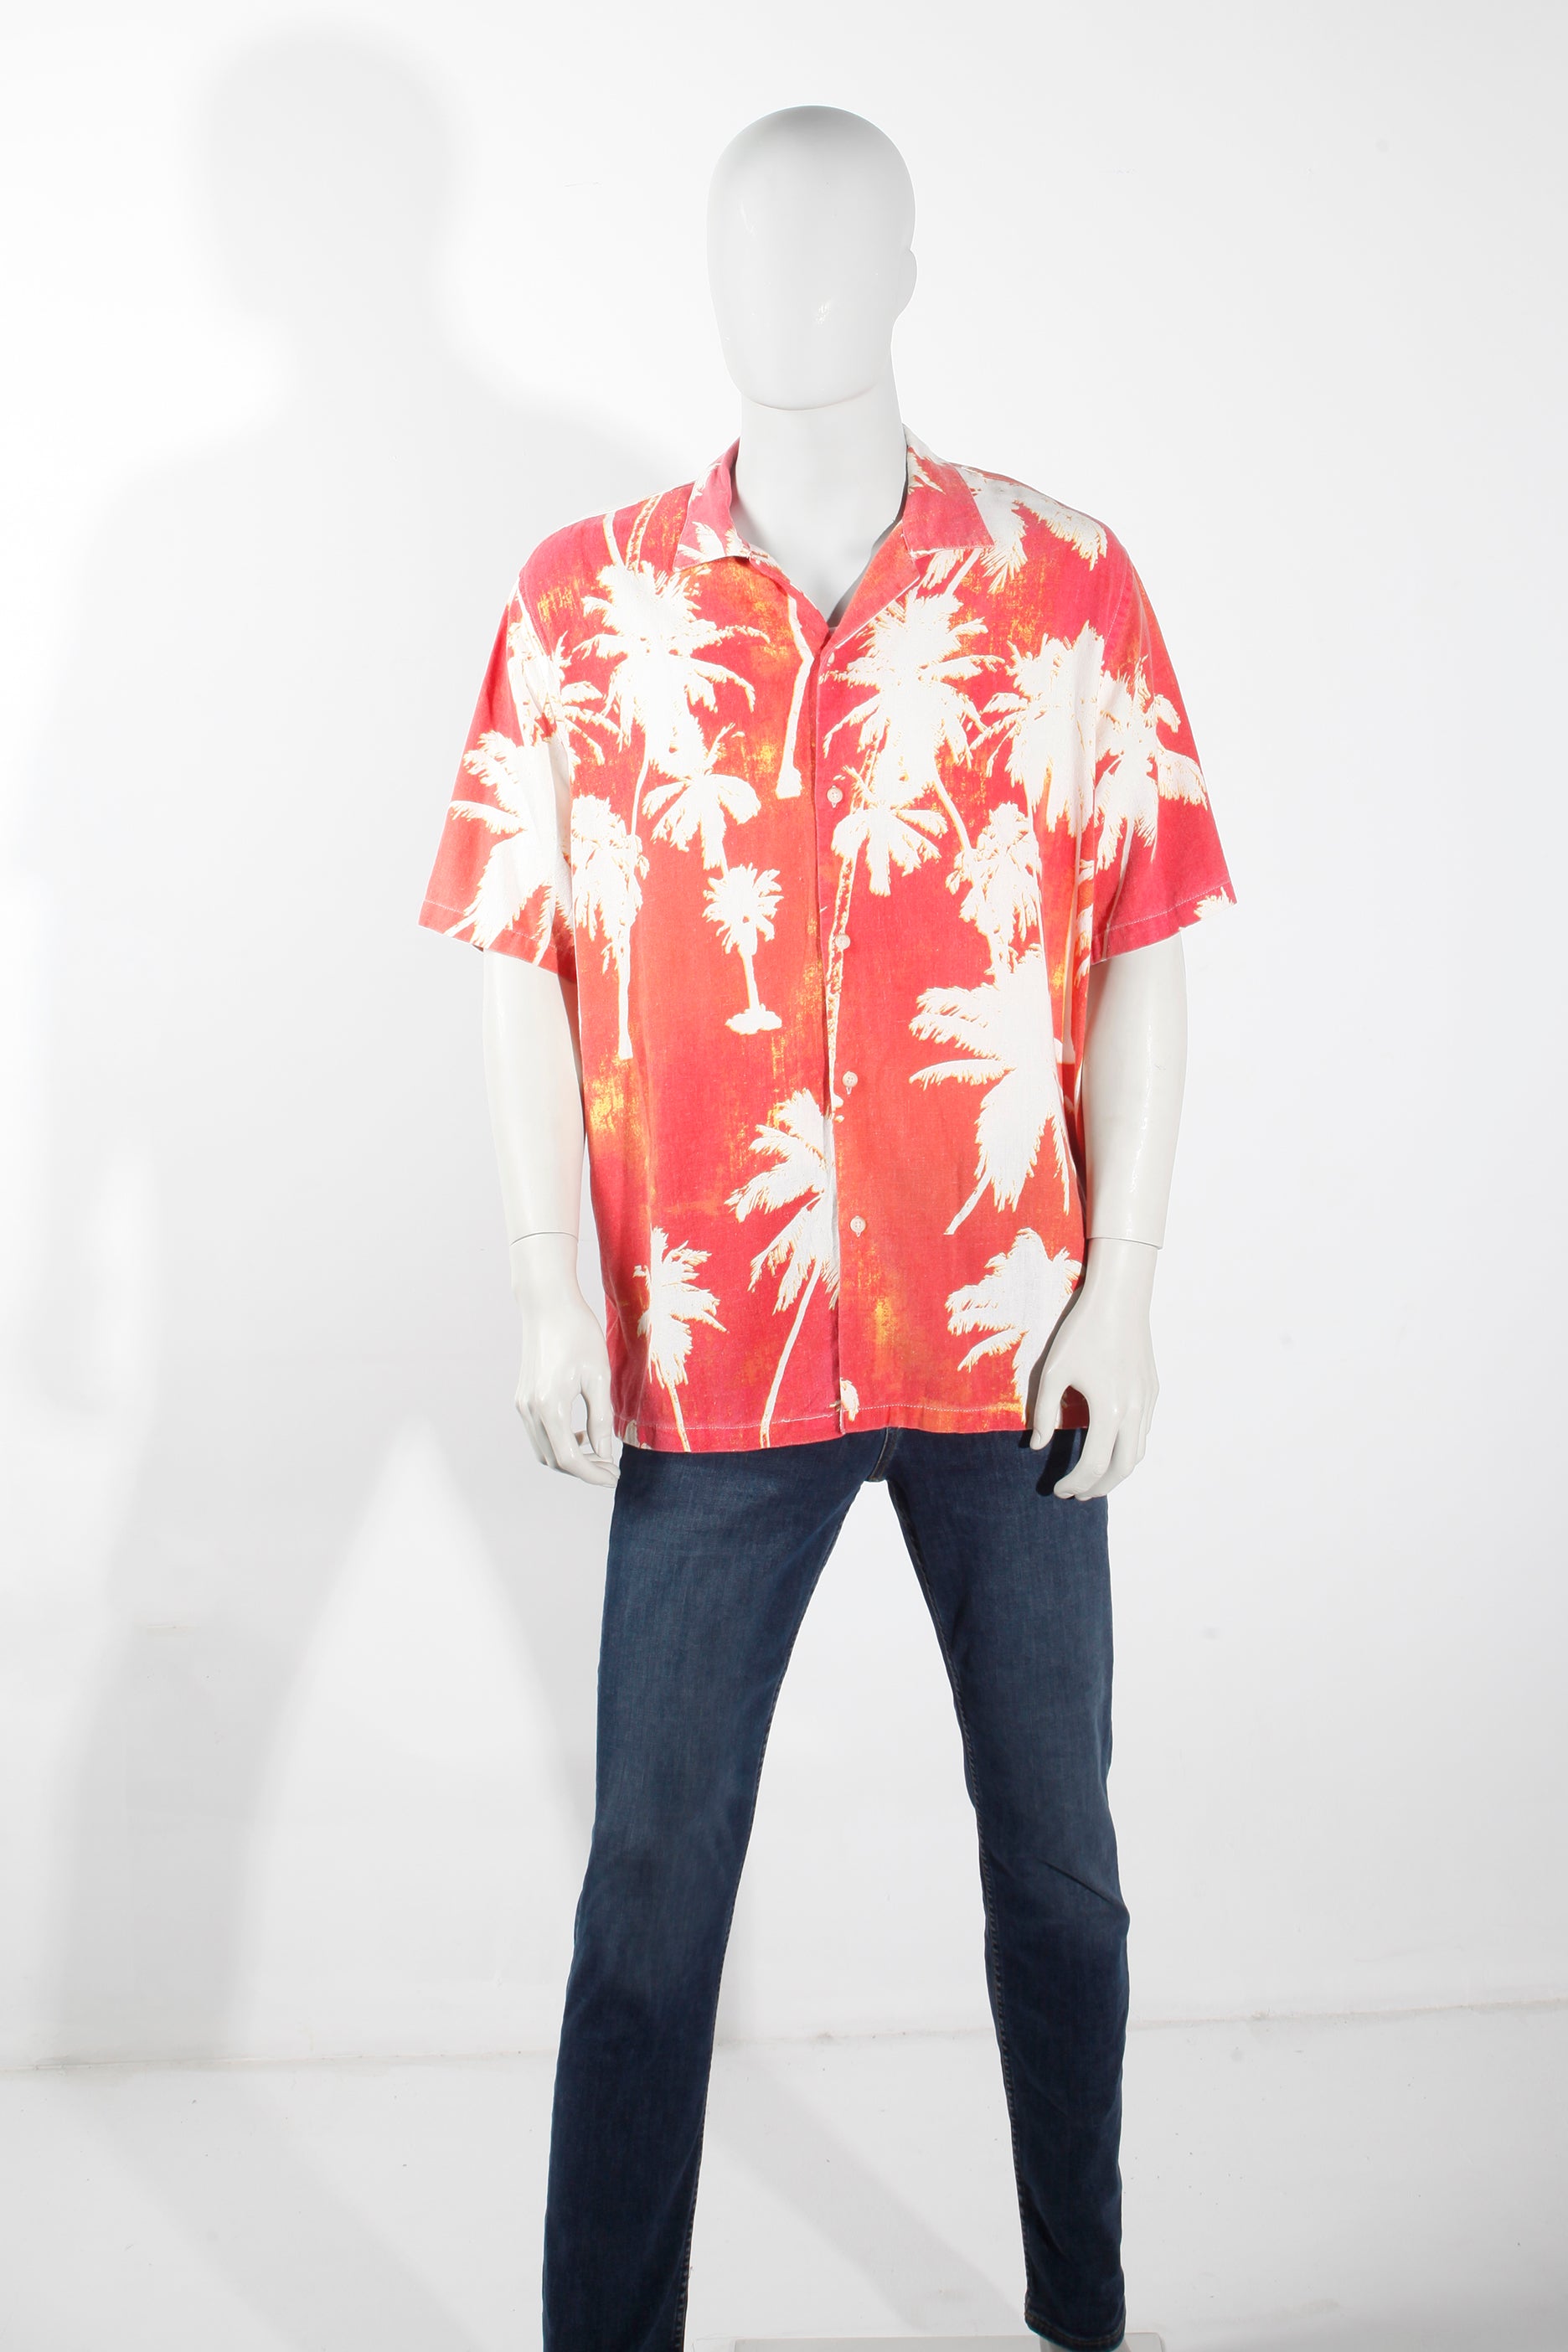 Palm Tree Print Orange Hawaiian Shirt (Medium)